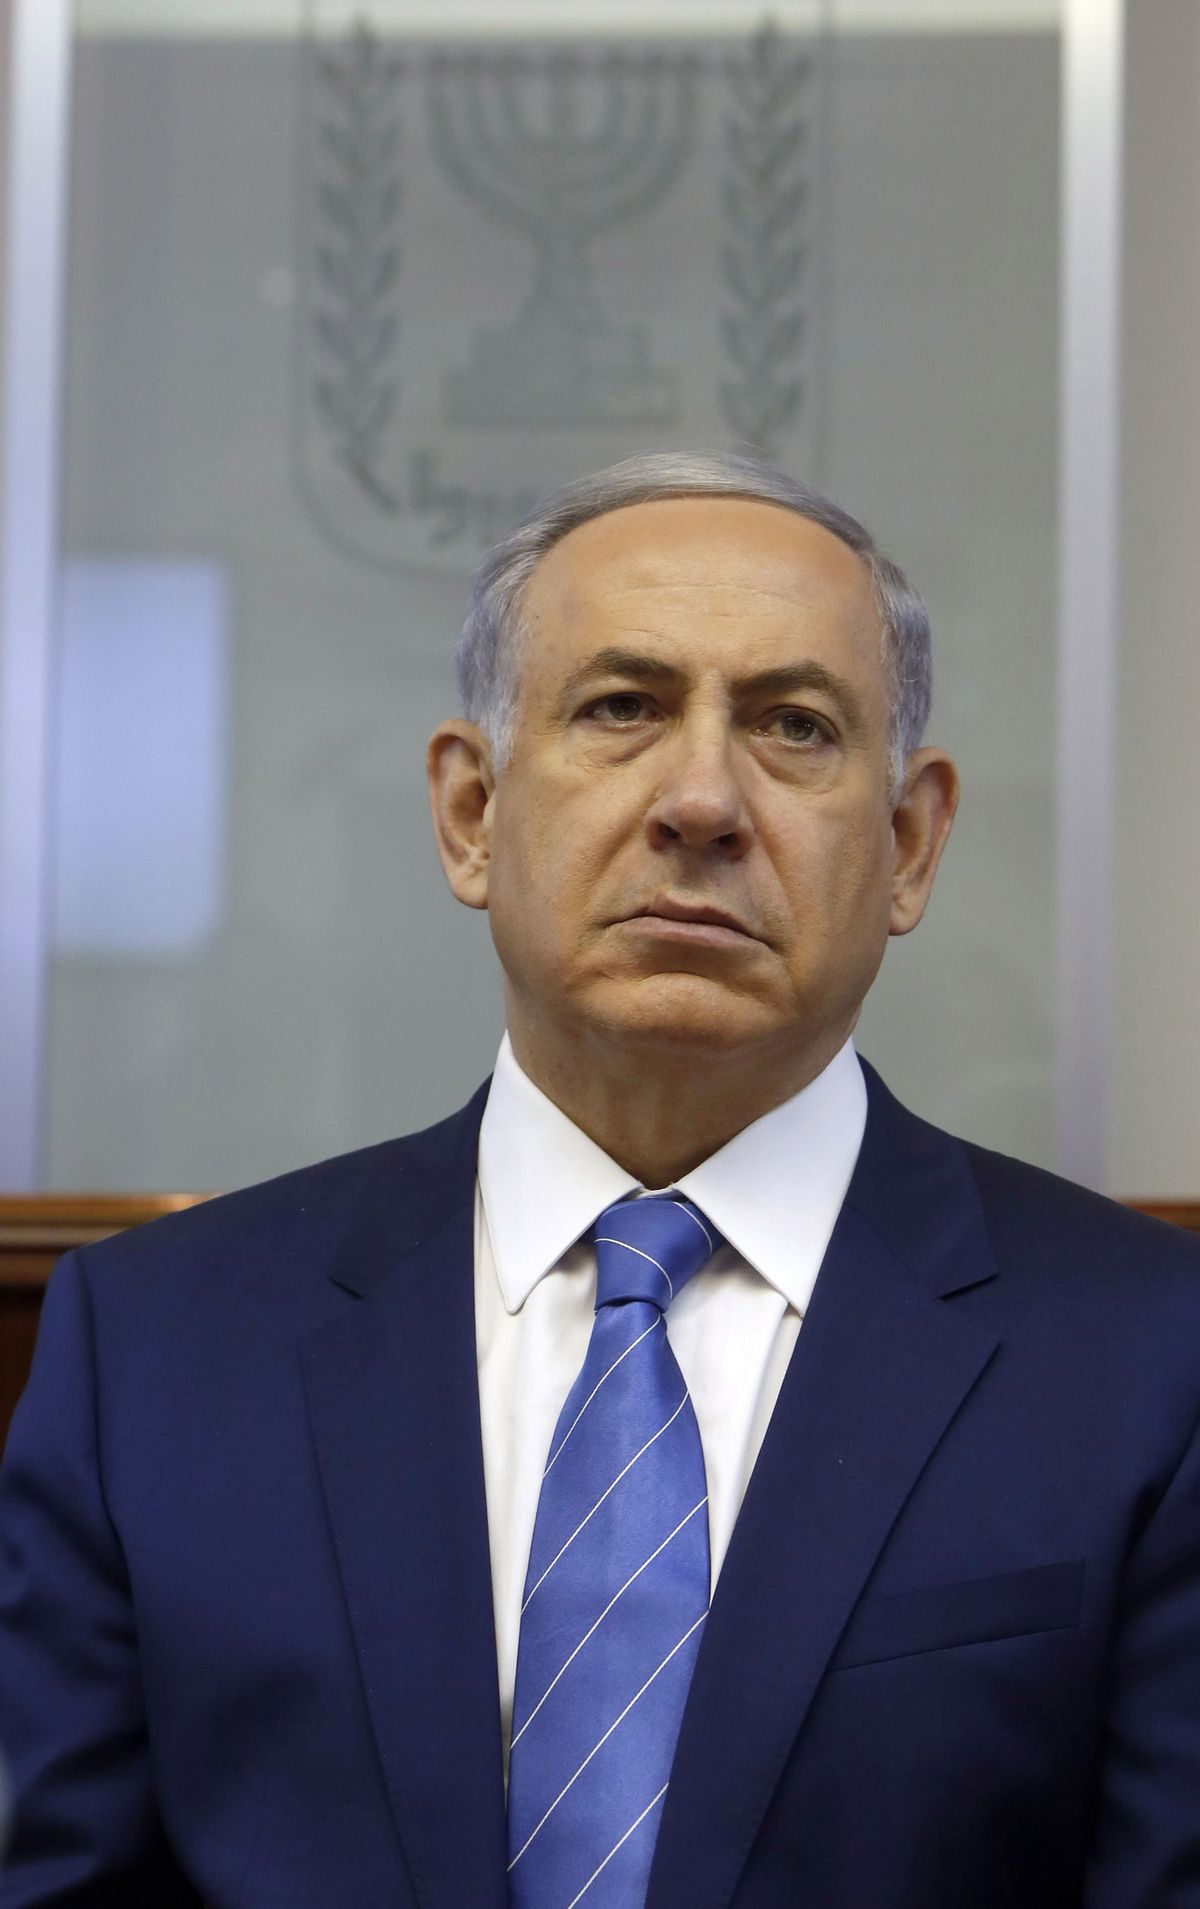 Israel's Prime Minister Benjamin Netanyahu chairs the weekly cabinet meeting in Jerusalem, Sunday, Aug. 2, 2015. (Gali Tibbon/Pool Photo via AP) (AP)